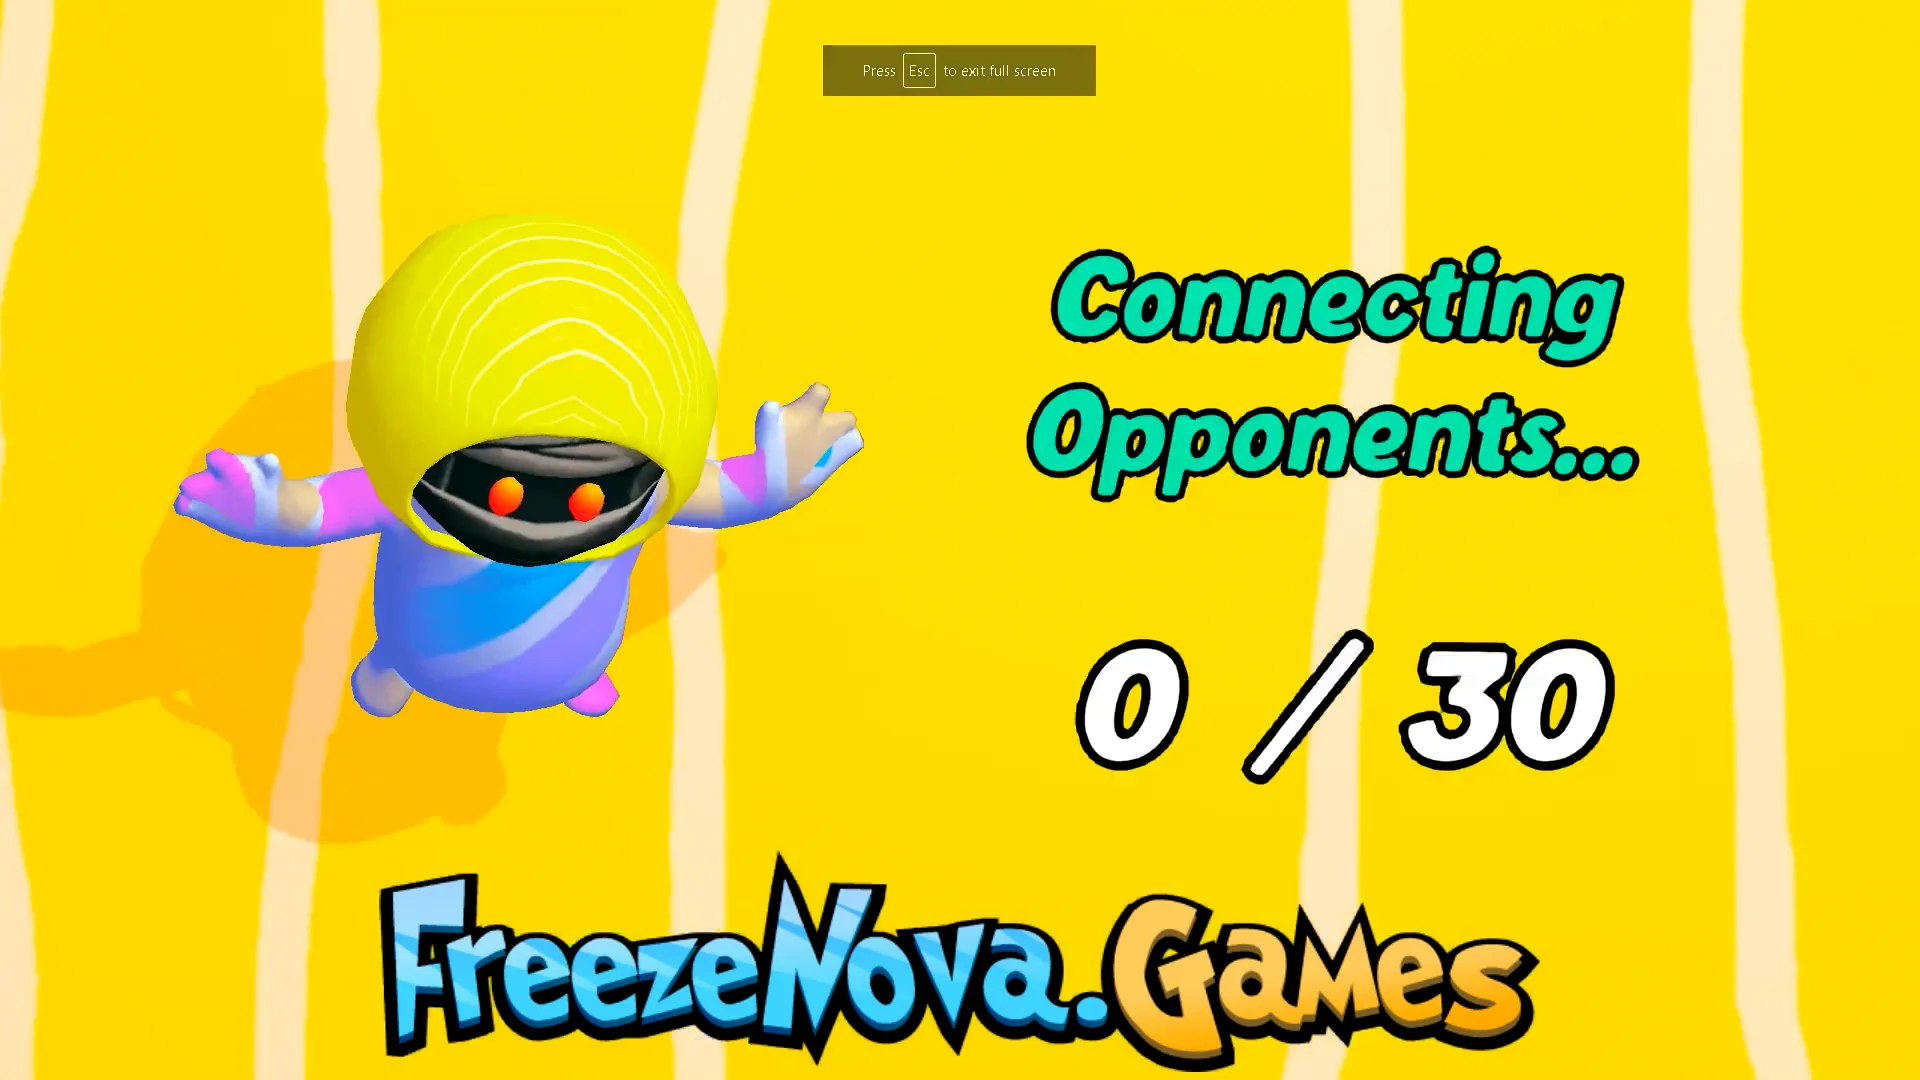 Unblocked Games FreezeNova - Best Unblocked Games in 2021 on Vimeo